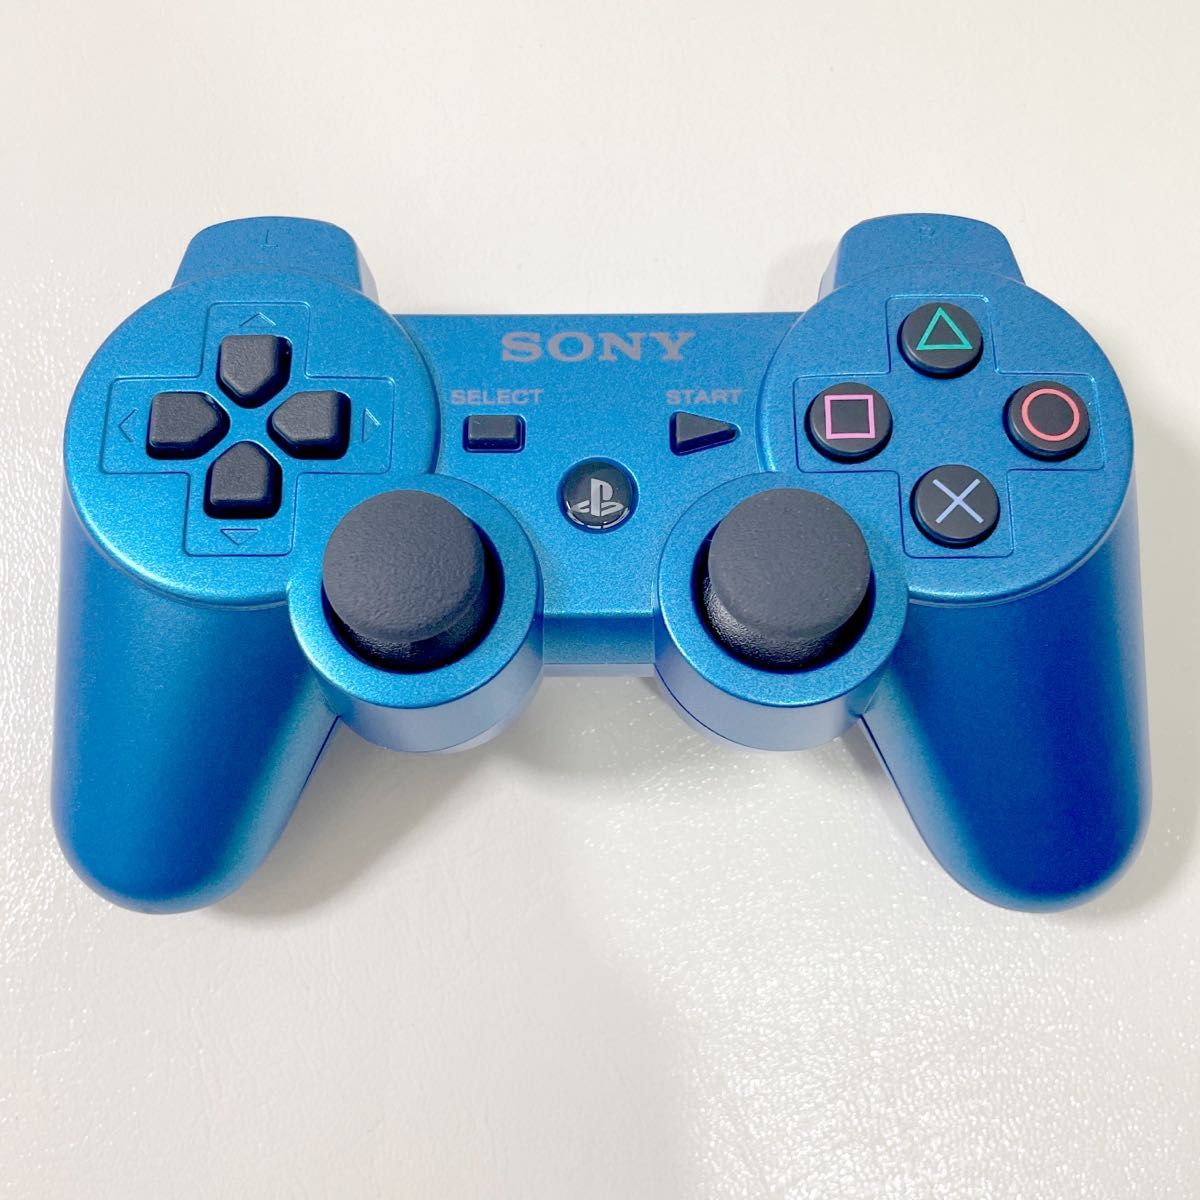 PS3 スプラッシュ ブルー 本体 青 CECH-3000B プレイステーション3